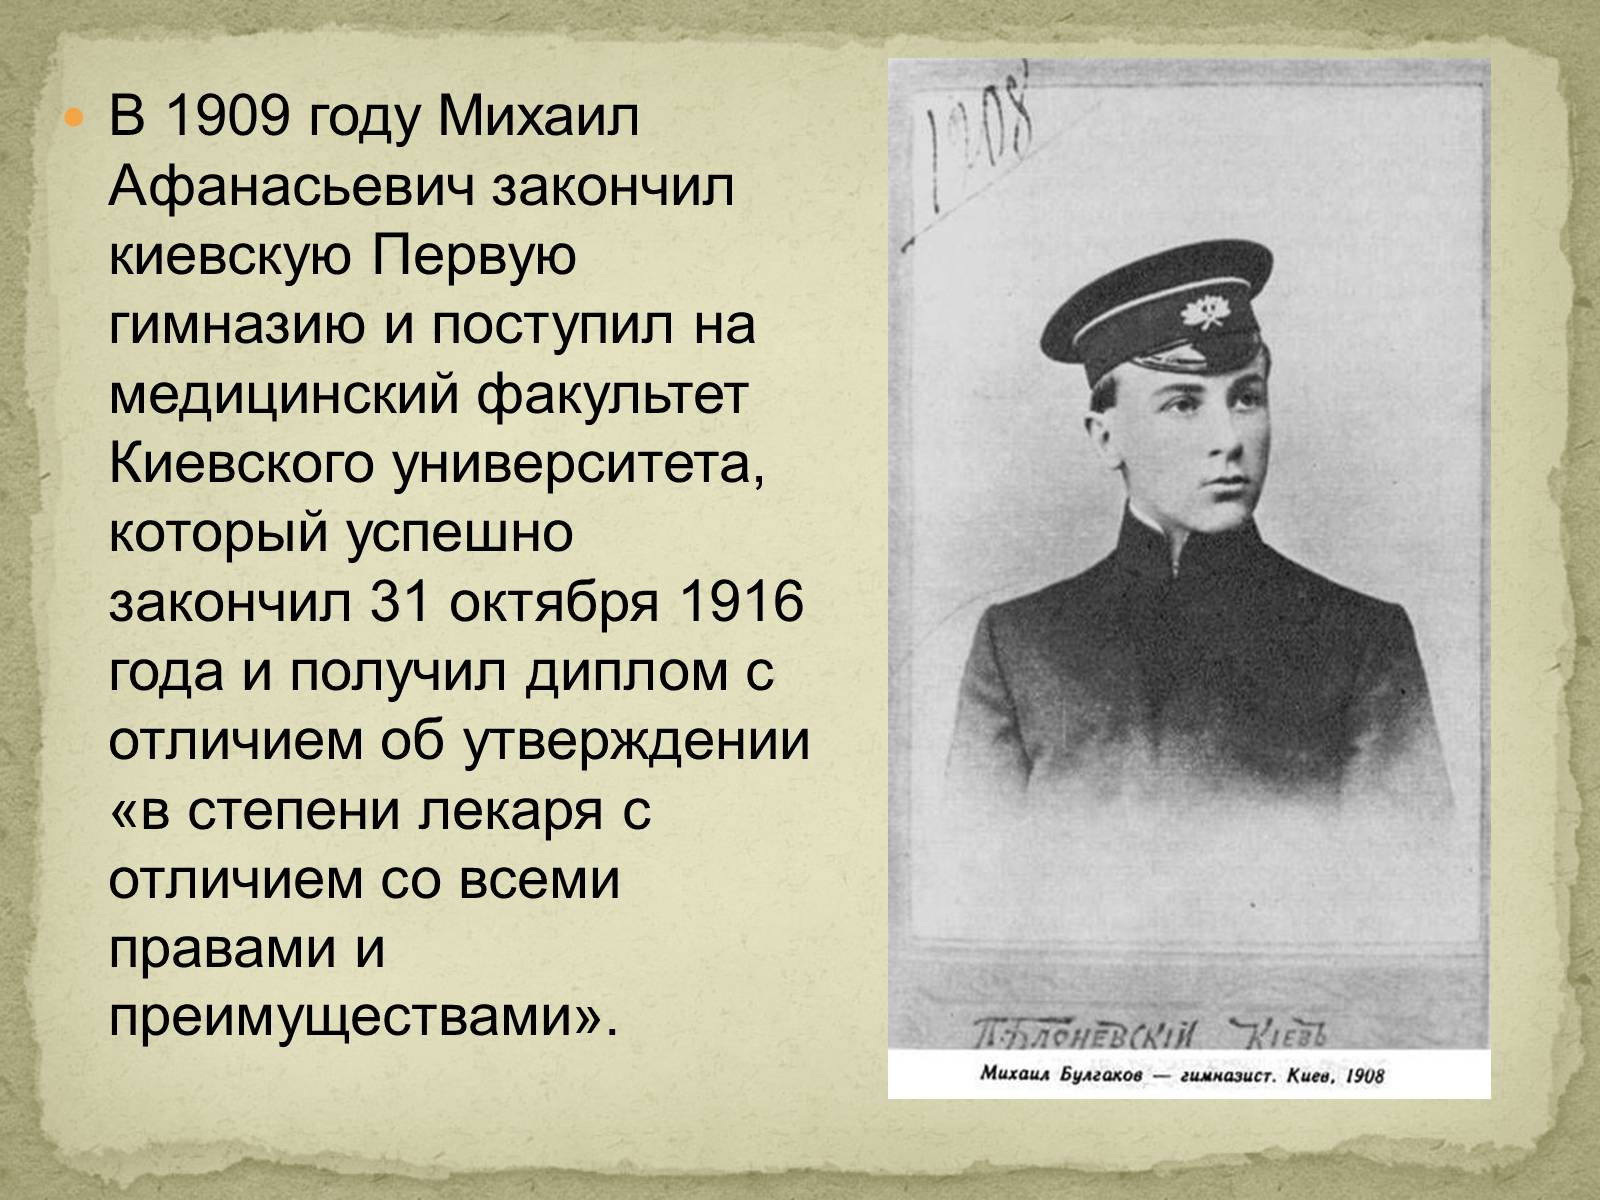 Какое образование получил булгаков. Булгаков гимназист. Булгаков 1916 год.